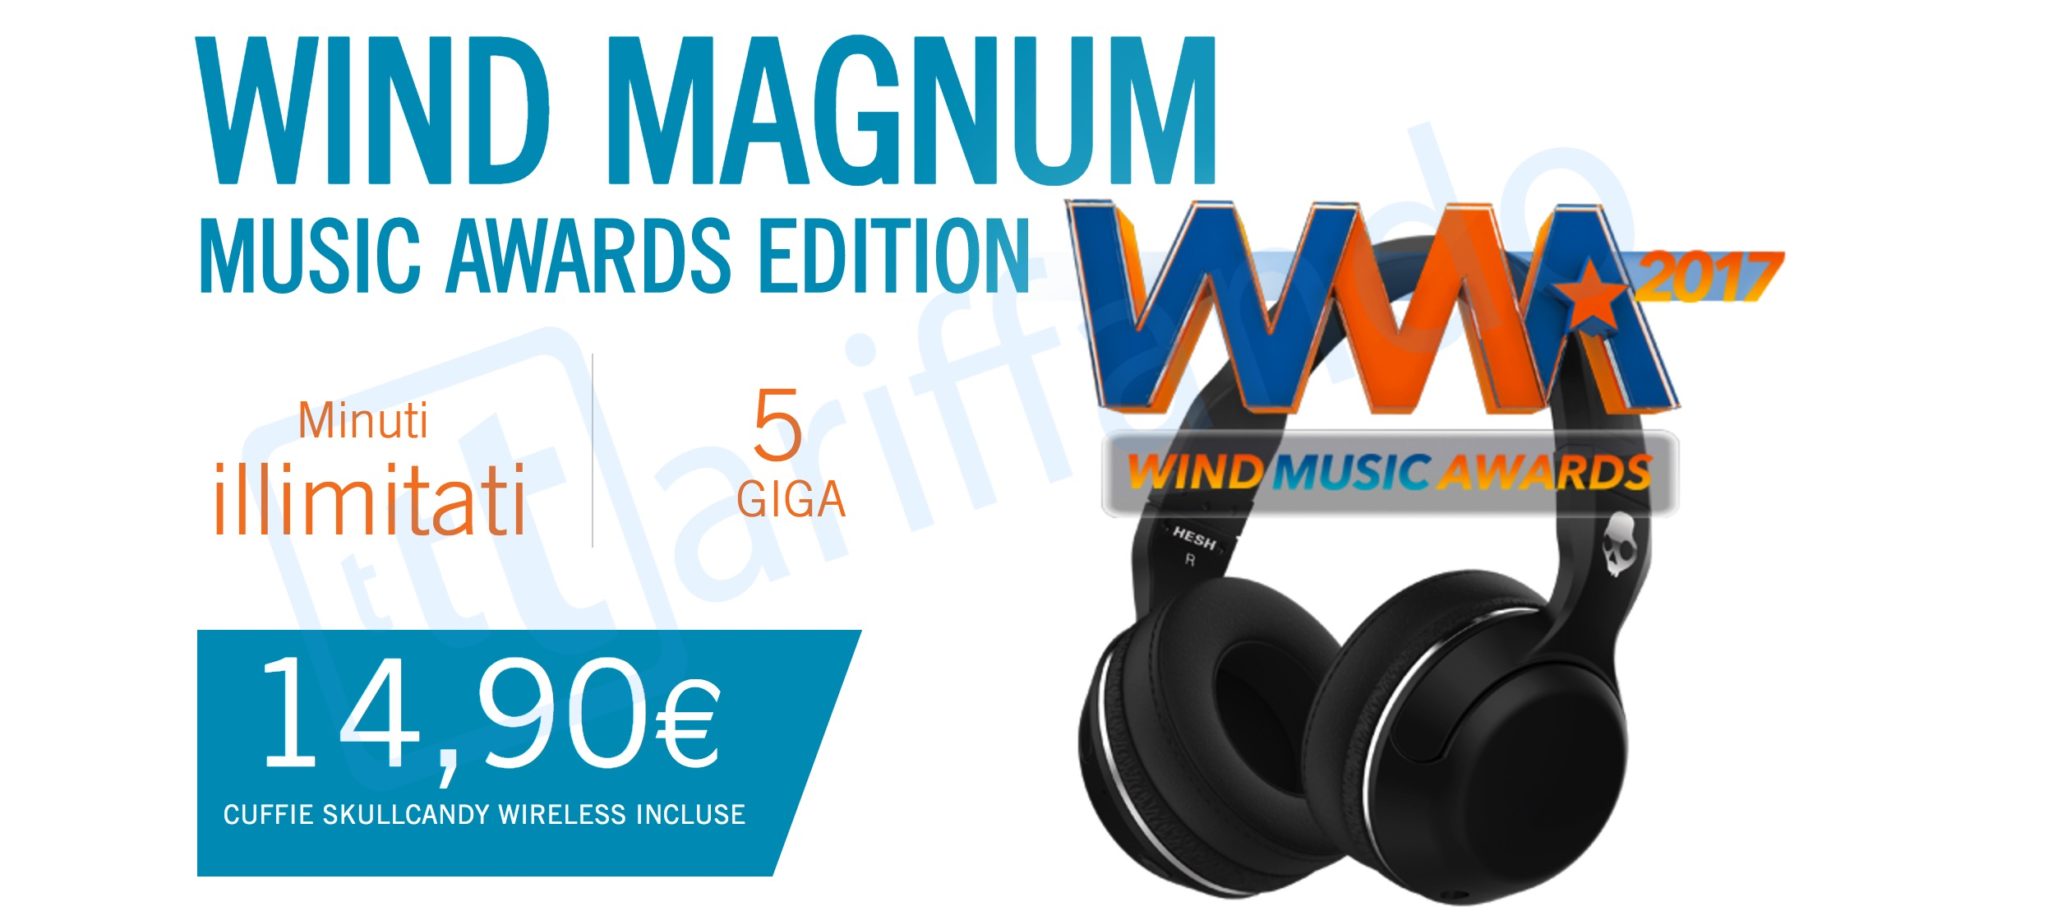 Wind Magnum Music Awards Edition